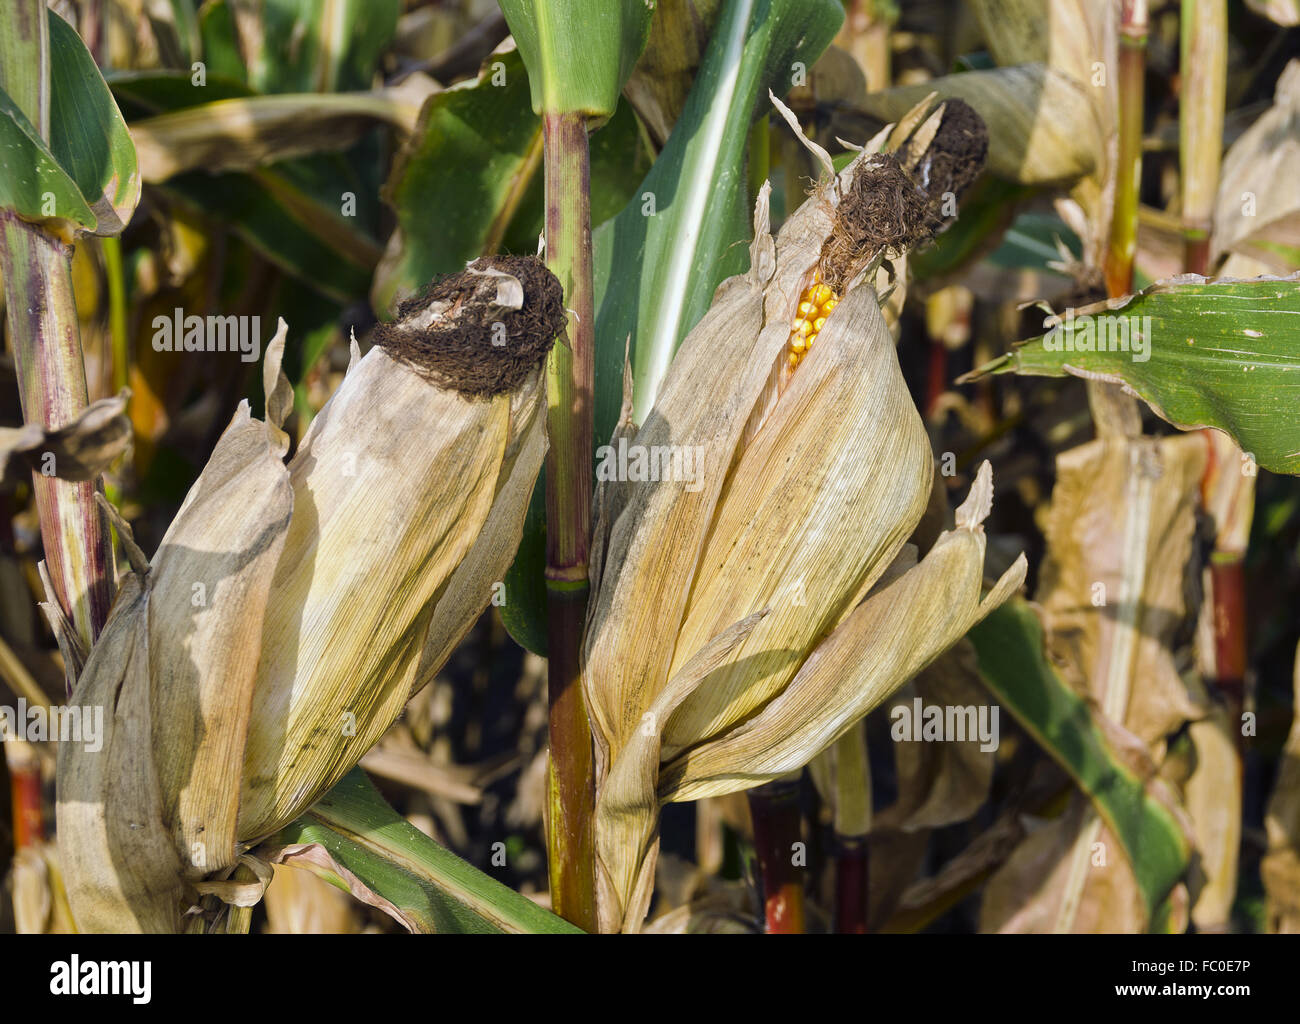 corn plants with cobs Stock Photo